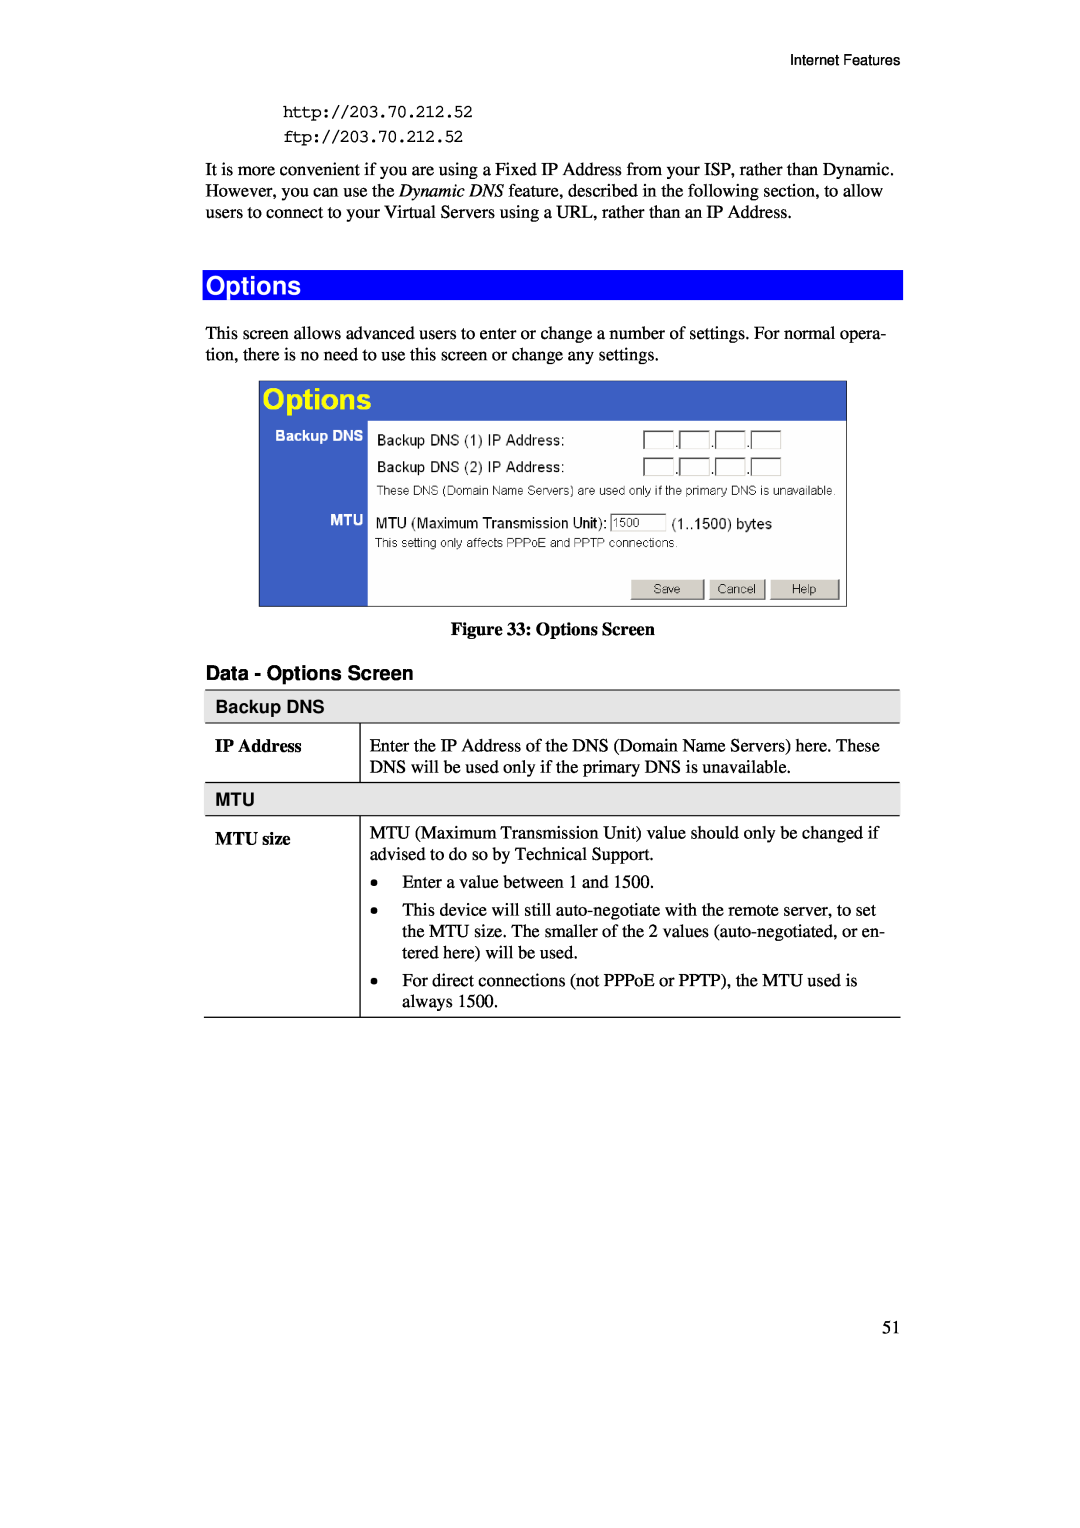 TRENDnet BRV204 manual Options Screen, Backup DNS, IP Address, MTU size 